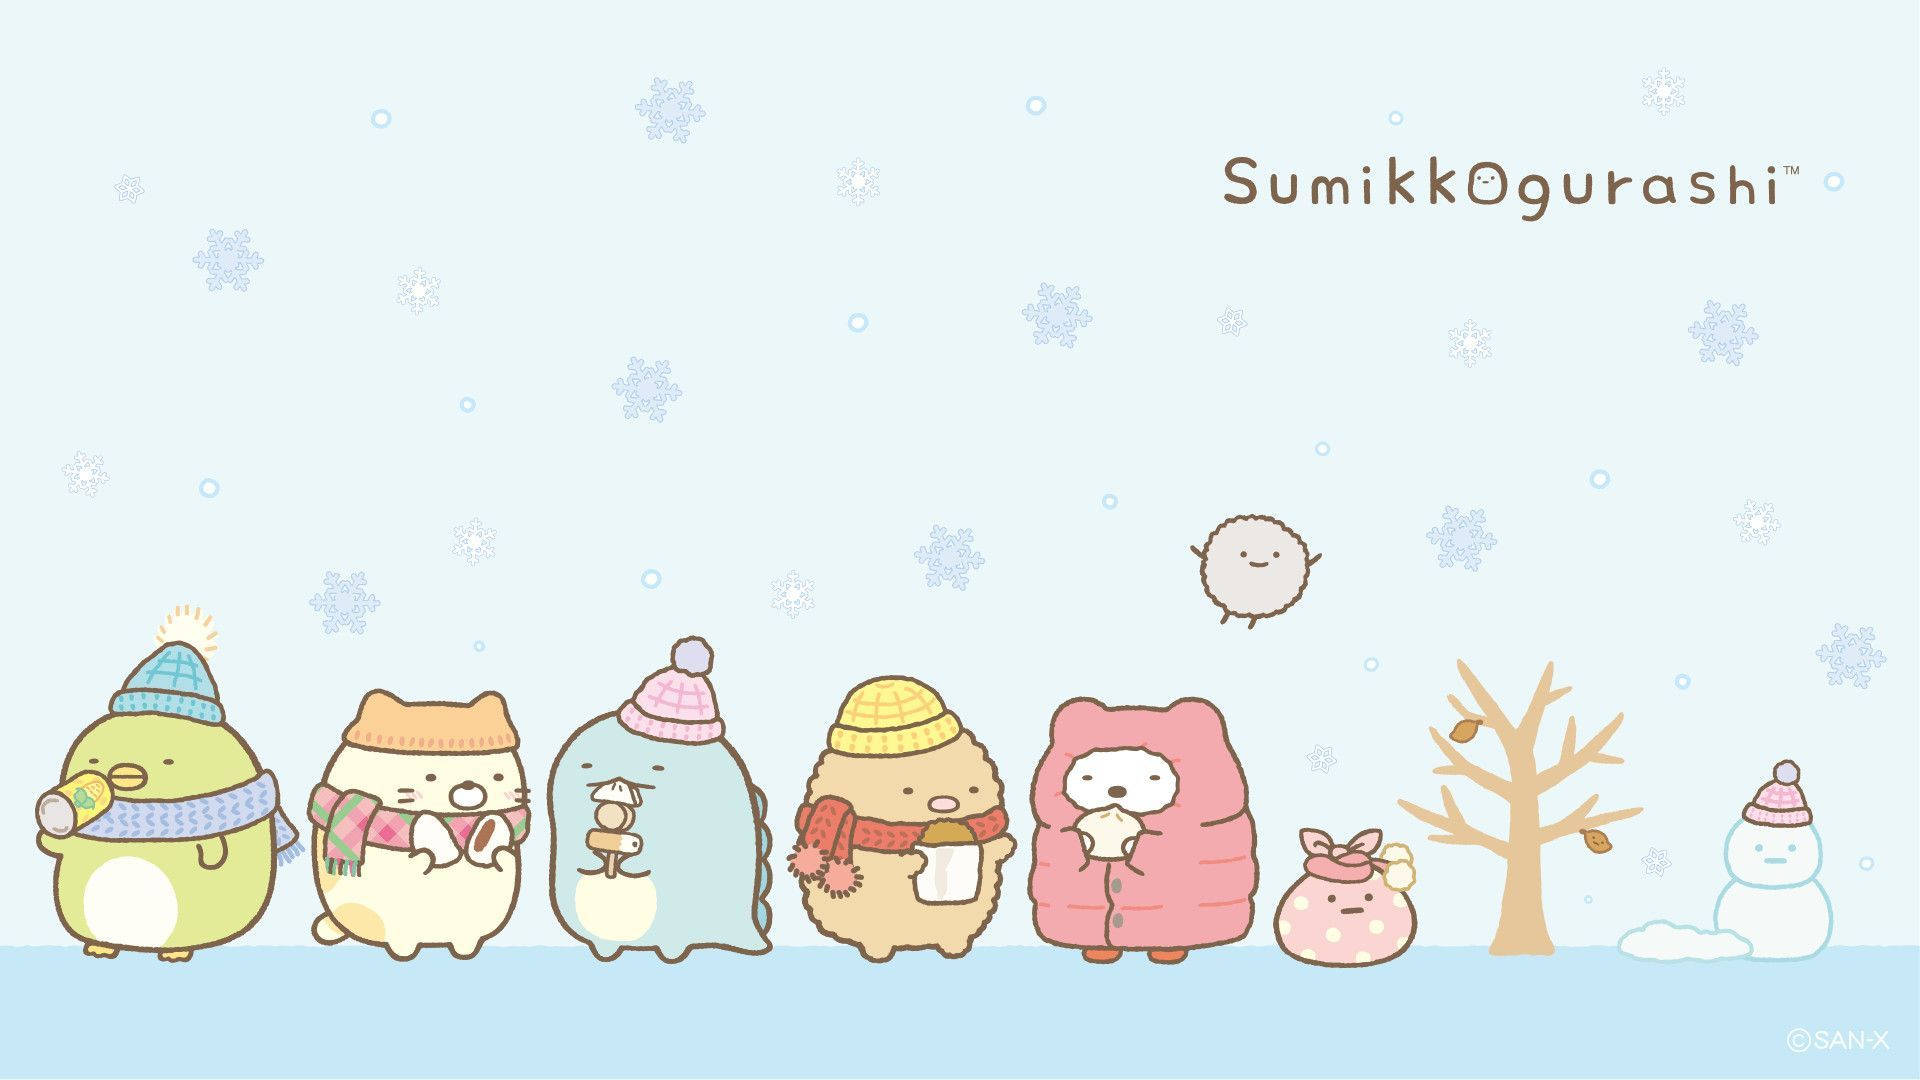 Sumikko Gurashi With Snowman Wallpaper